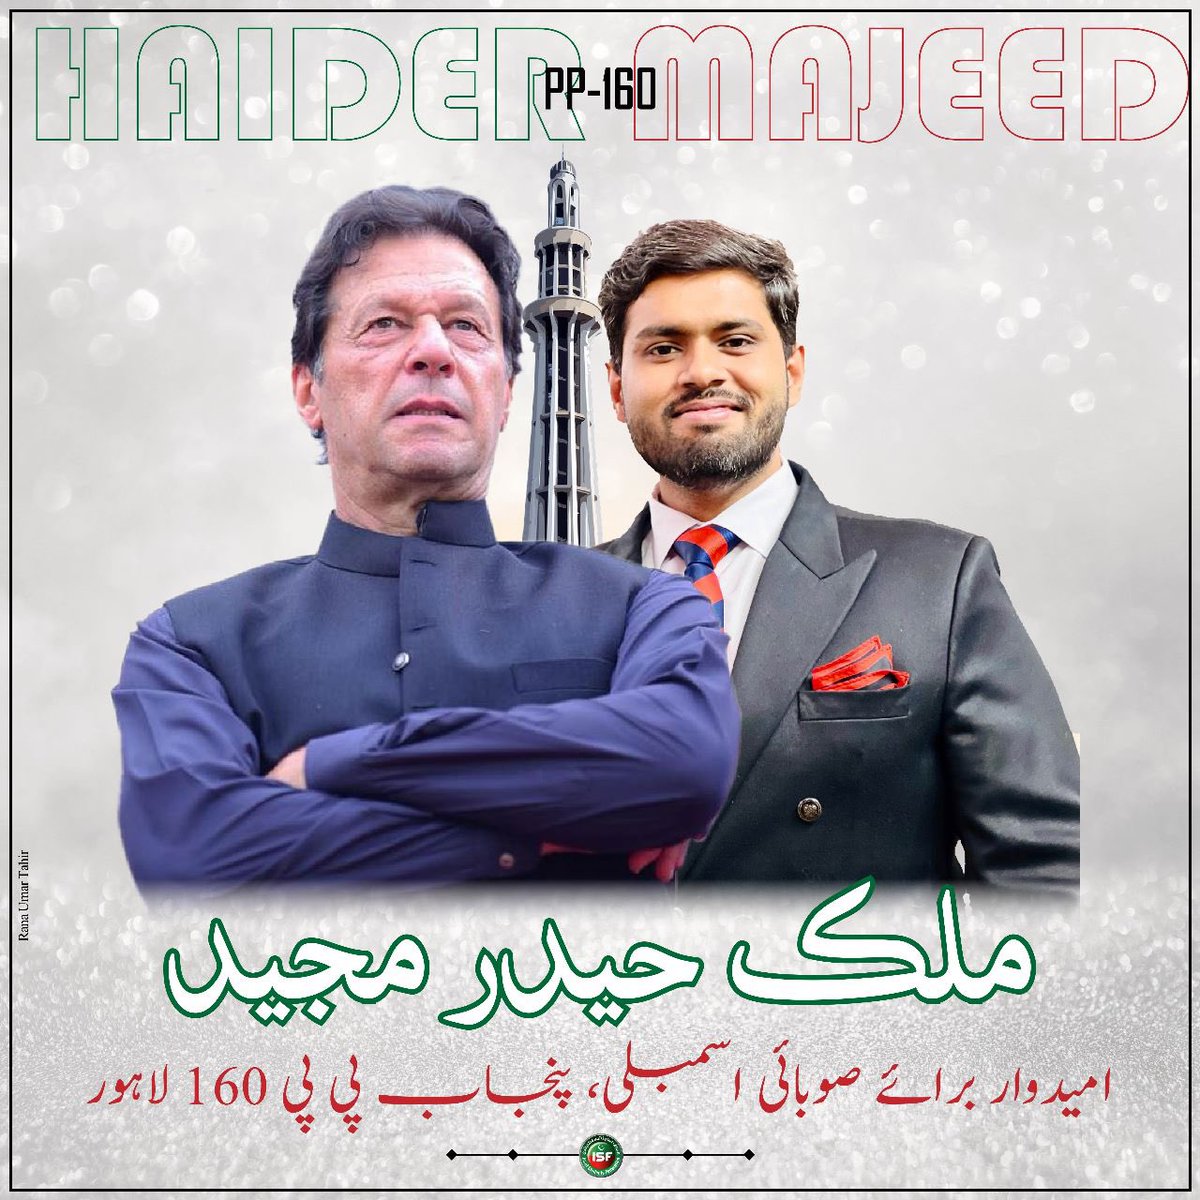 Haider Majeed PP 160 Lahore Biography